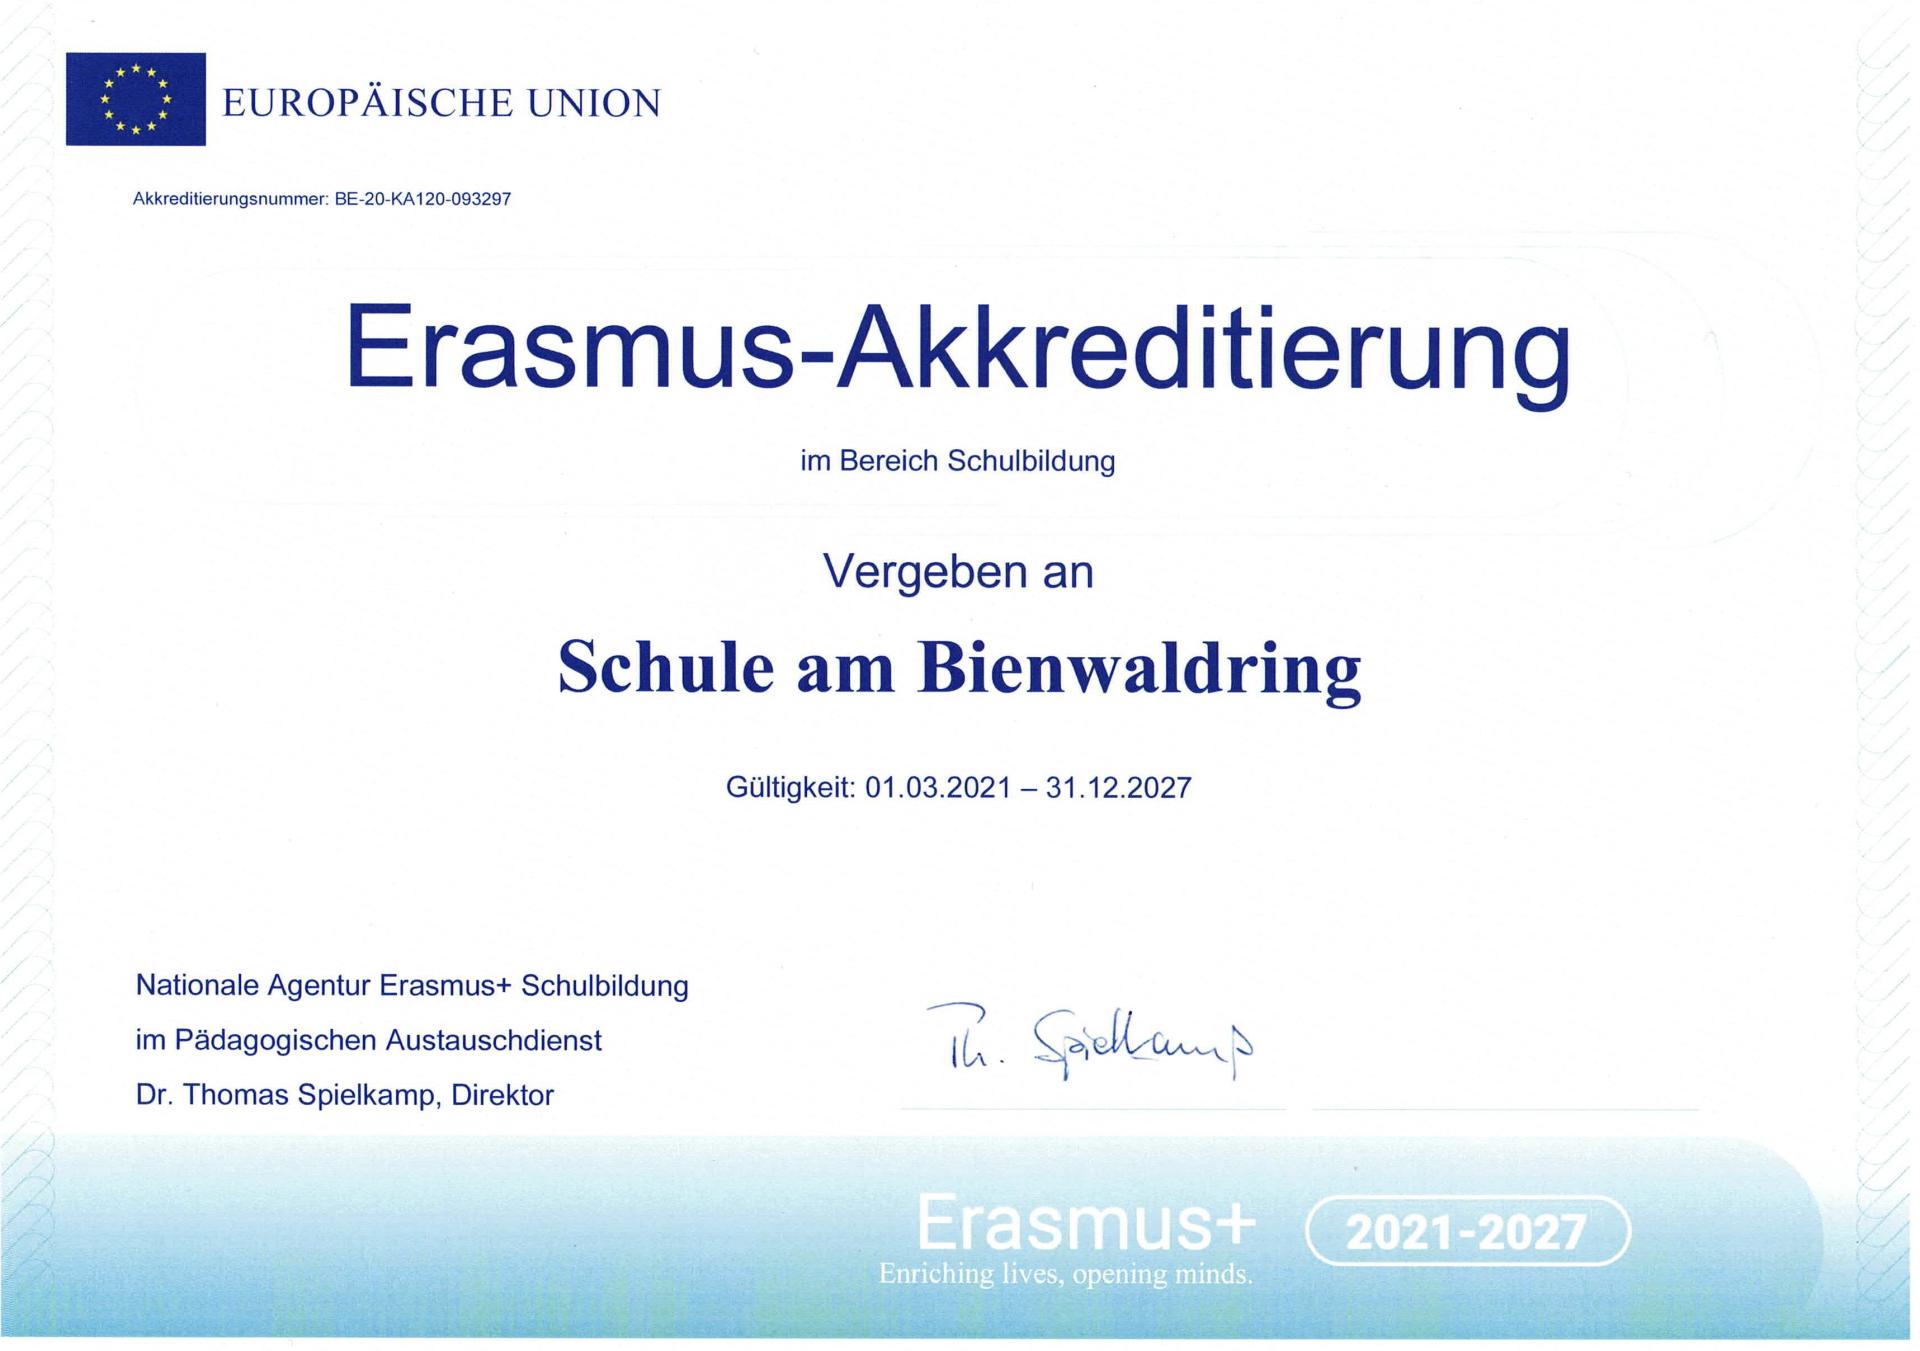 Erasmus-Akkreditierung 2021-2027